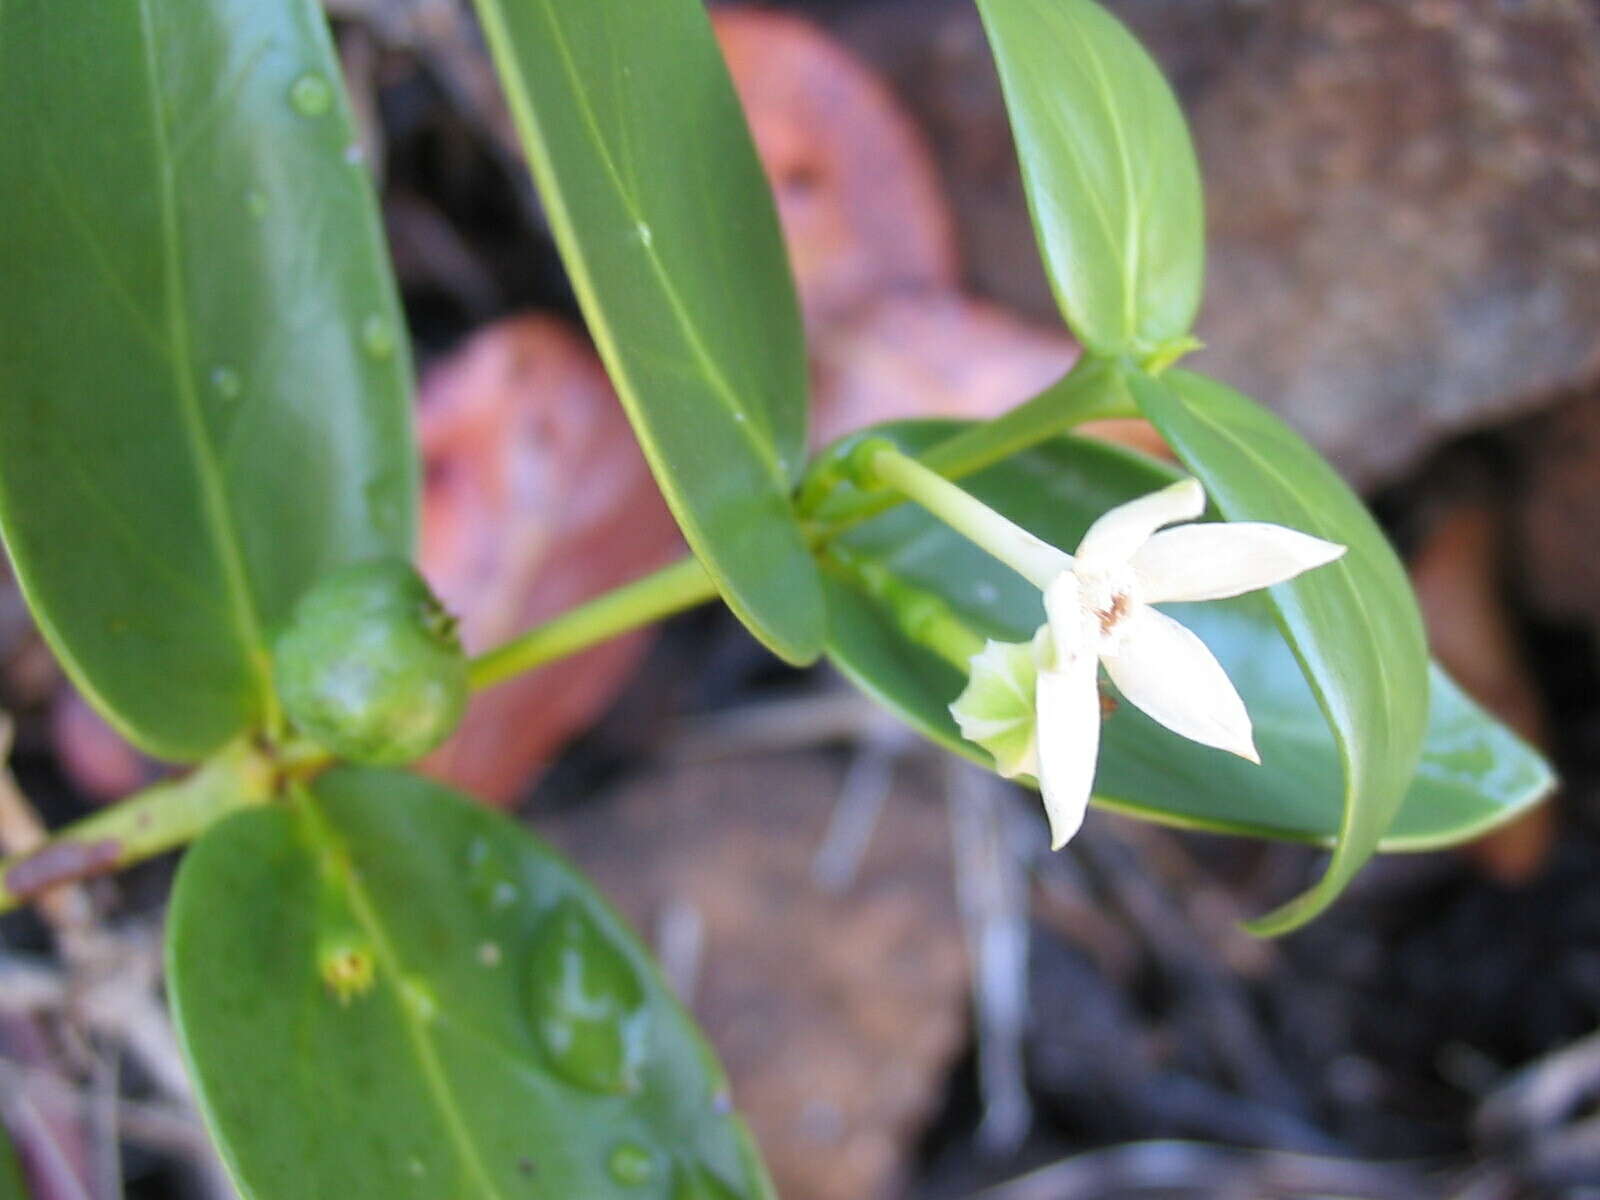 Image of Cyclophyllum letocartiorum Mouly